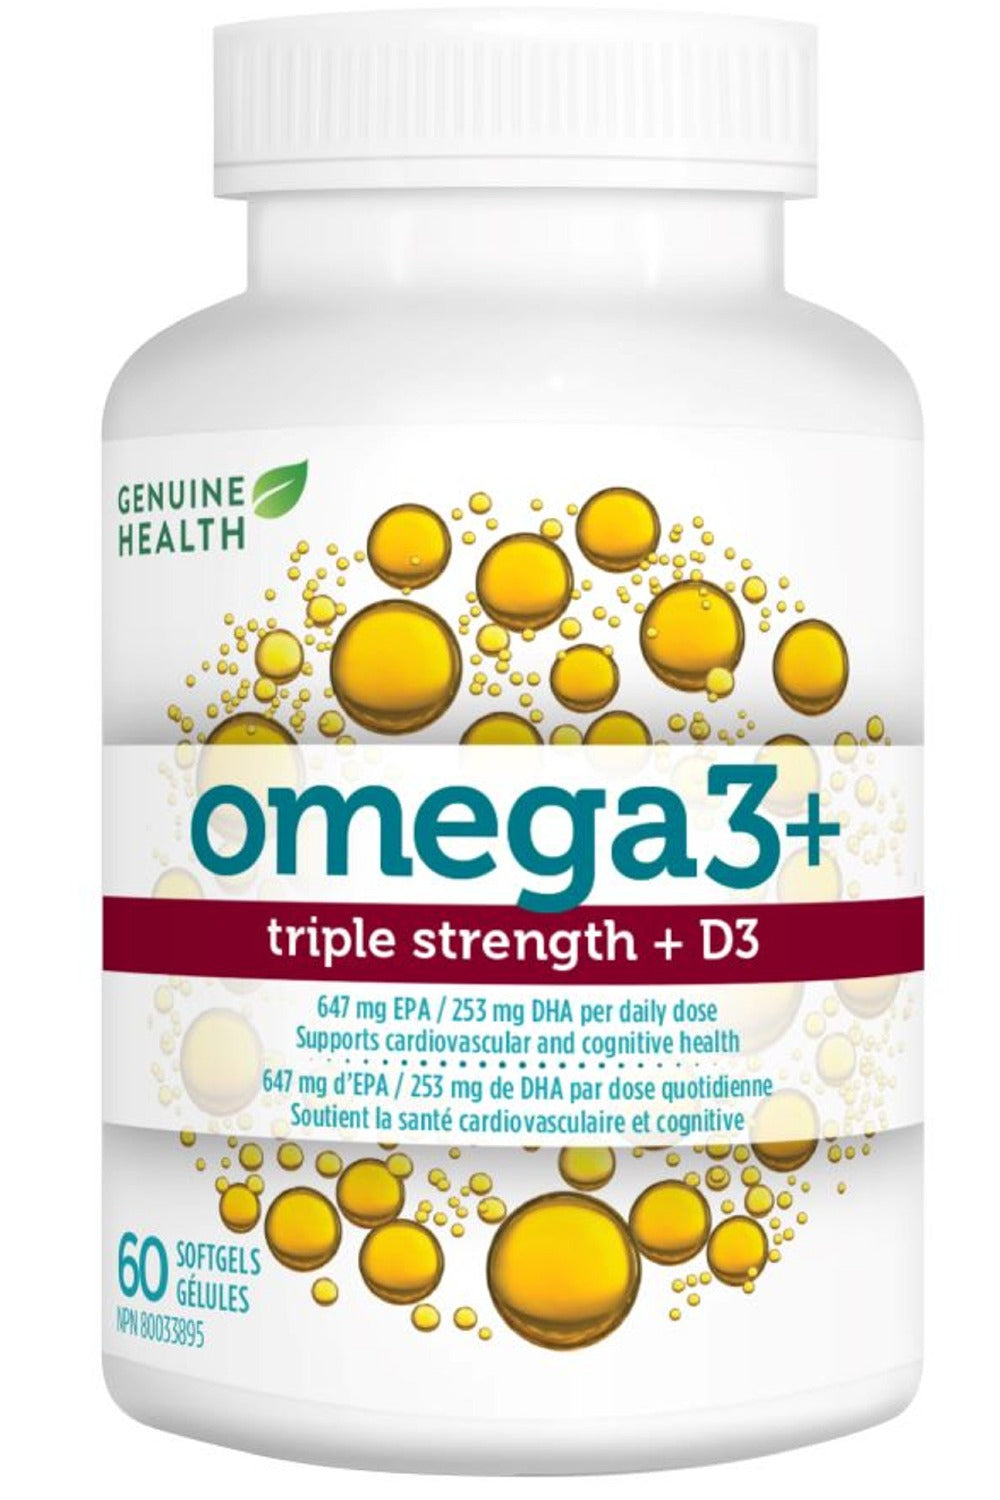 GENUINE HEALTH Omega3+ TRIPLE STRENGTH + D3 (60 capsules)